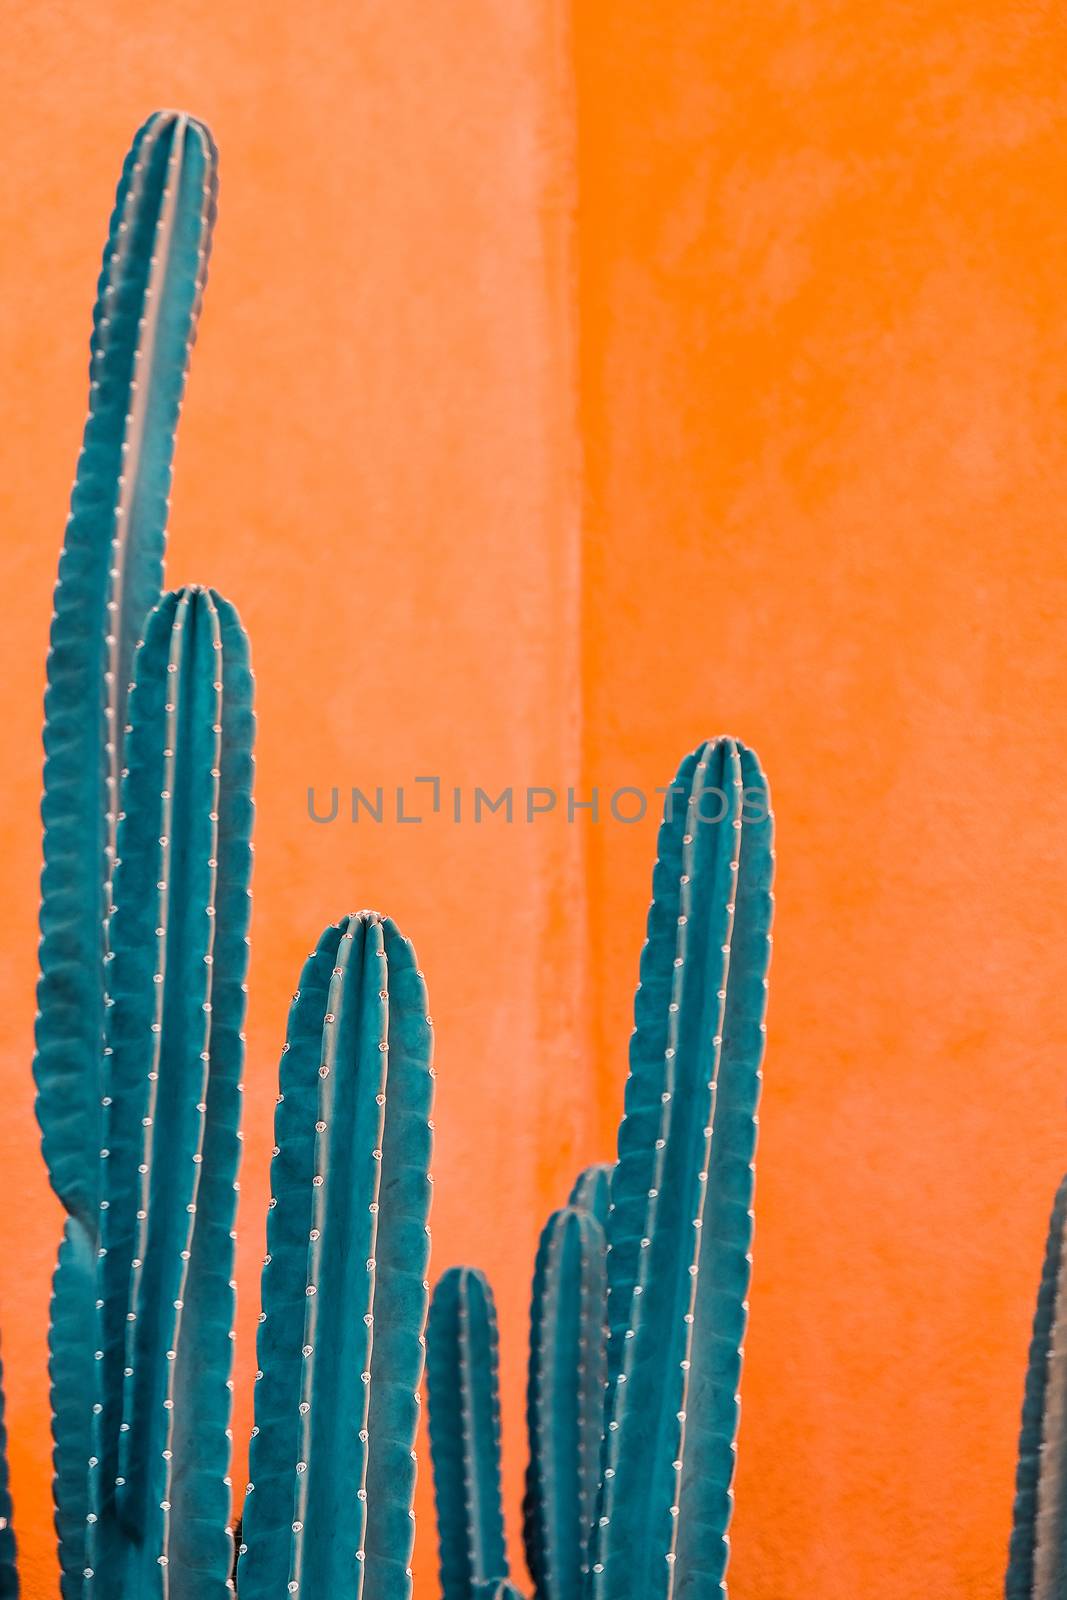 image of Green cactus against orange background.